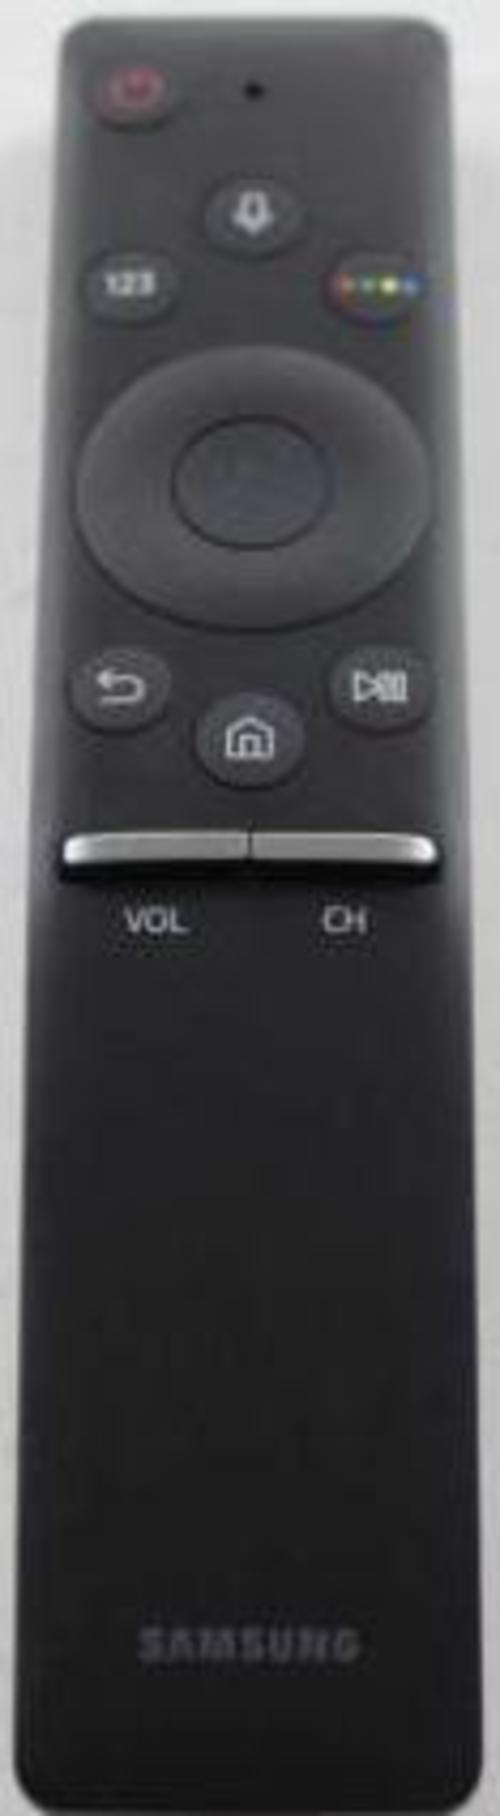 Samsung BN59-01292A TV Remote Control - Black